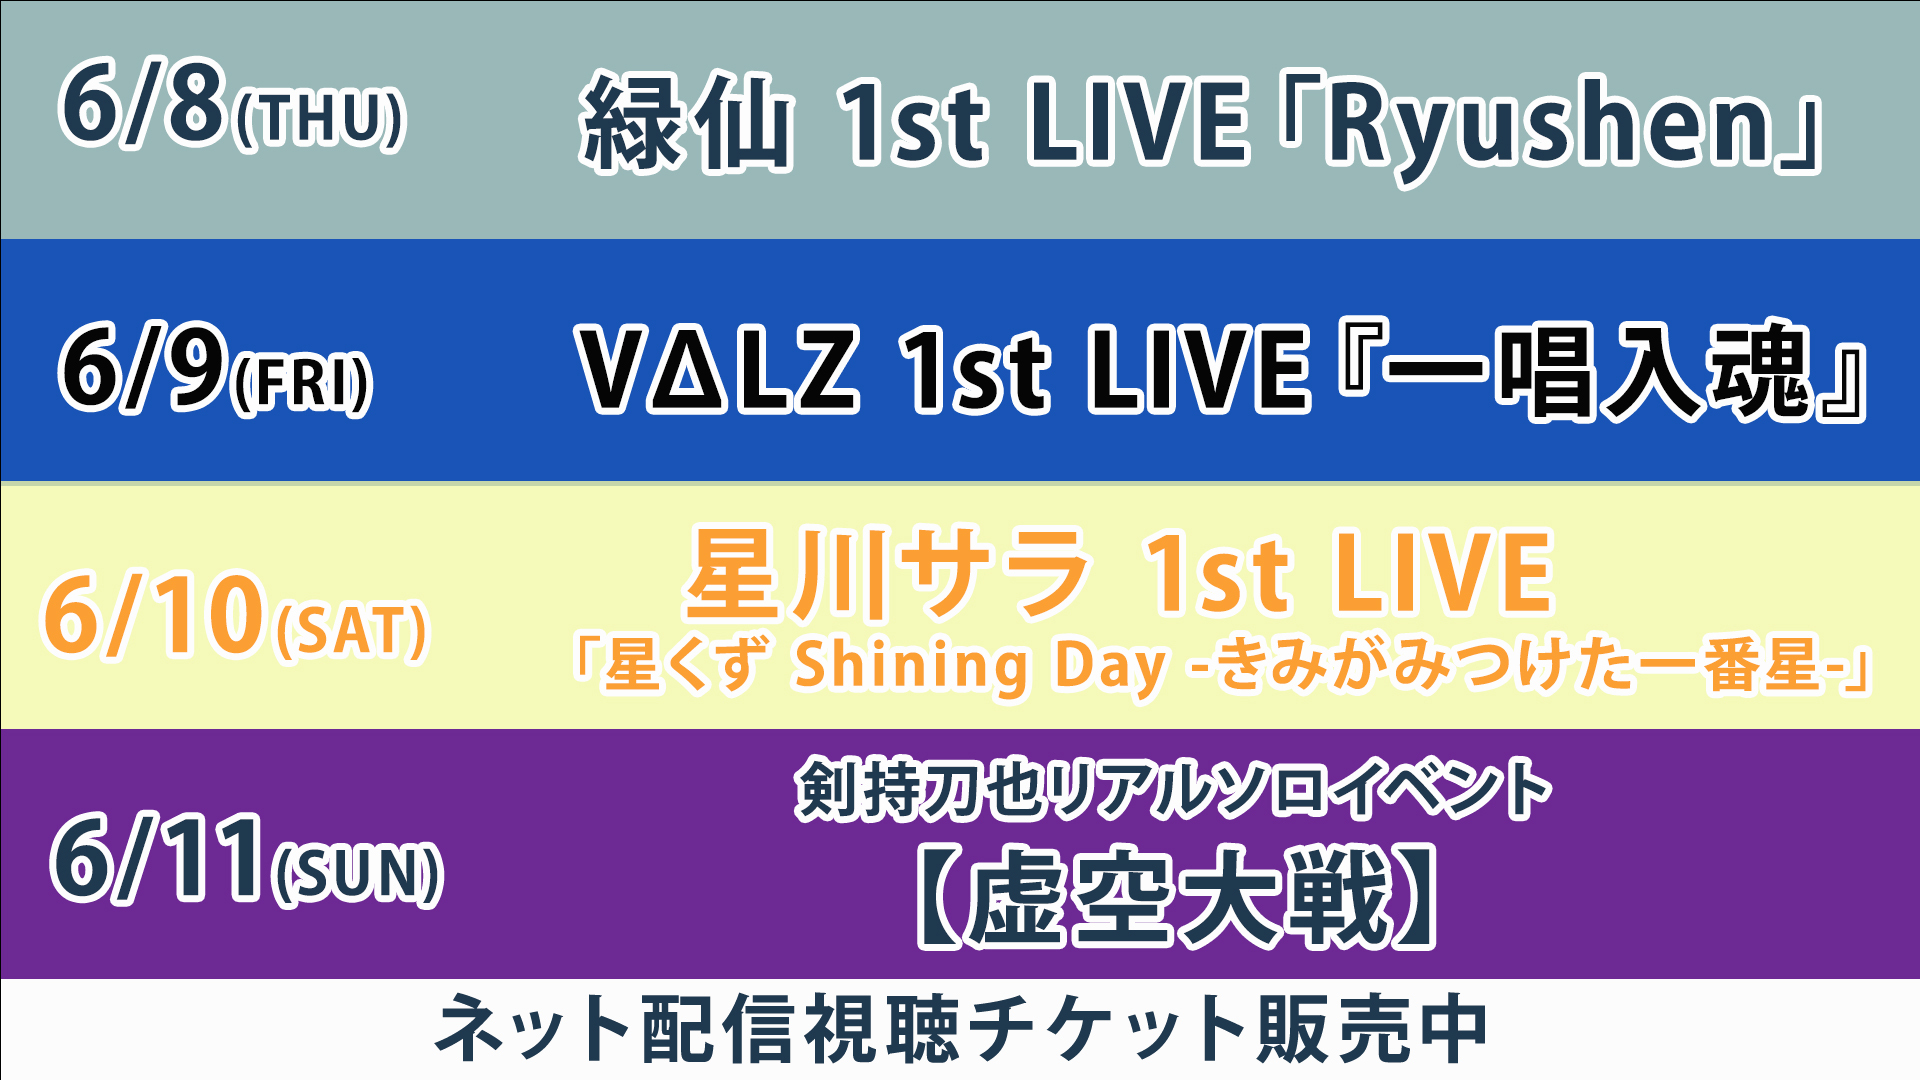 VΔLZ 1st LIVE 『一唱入魂』ニコ生視聴チケット